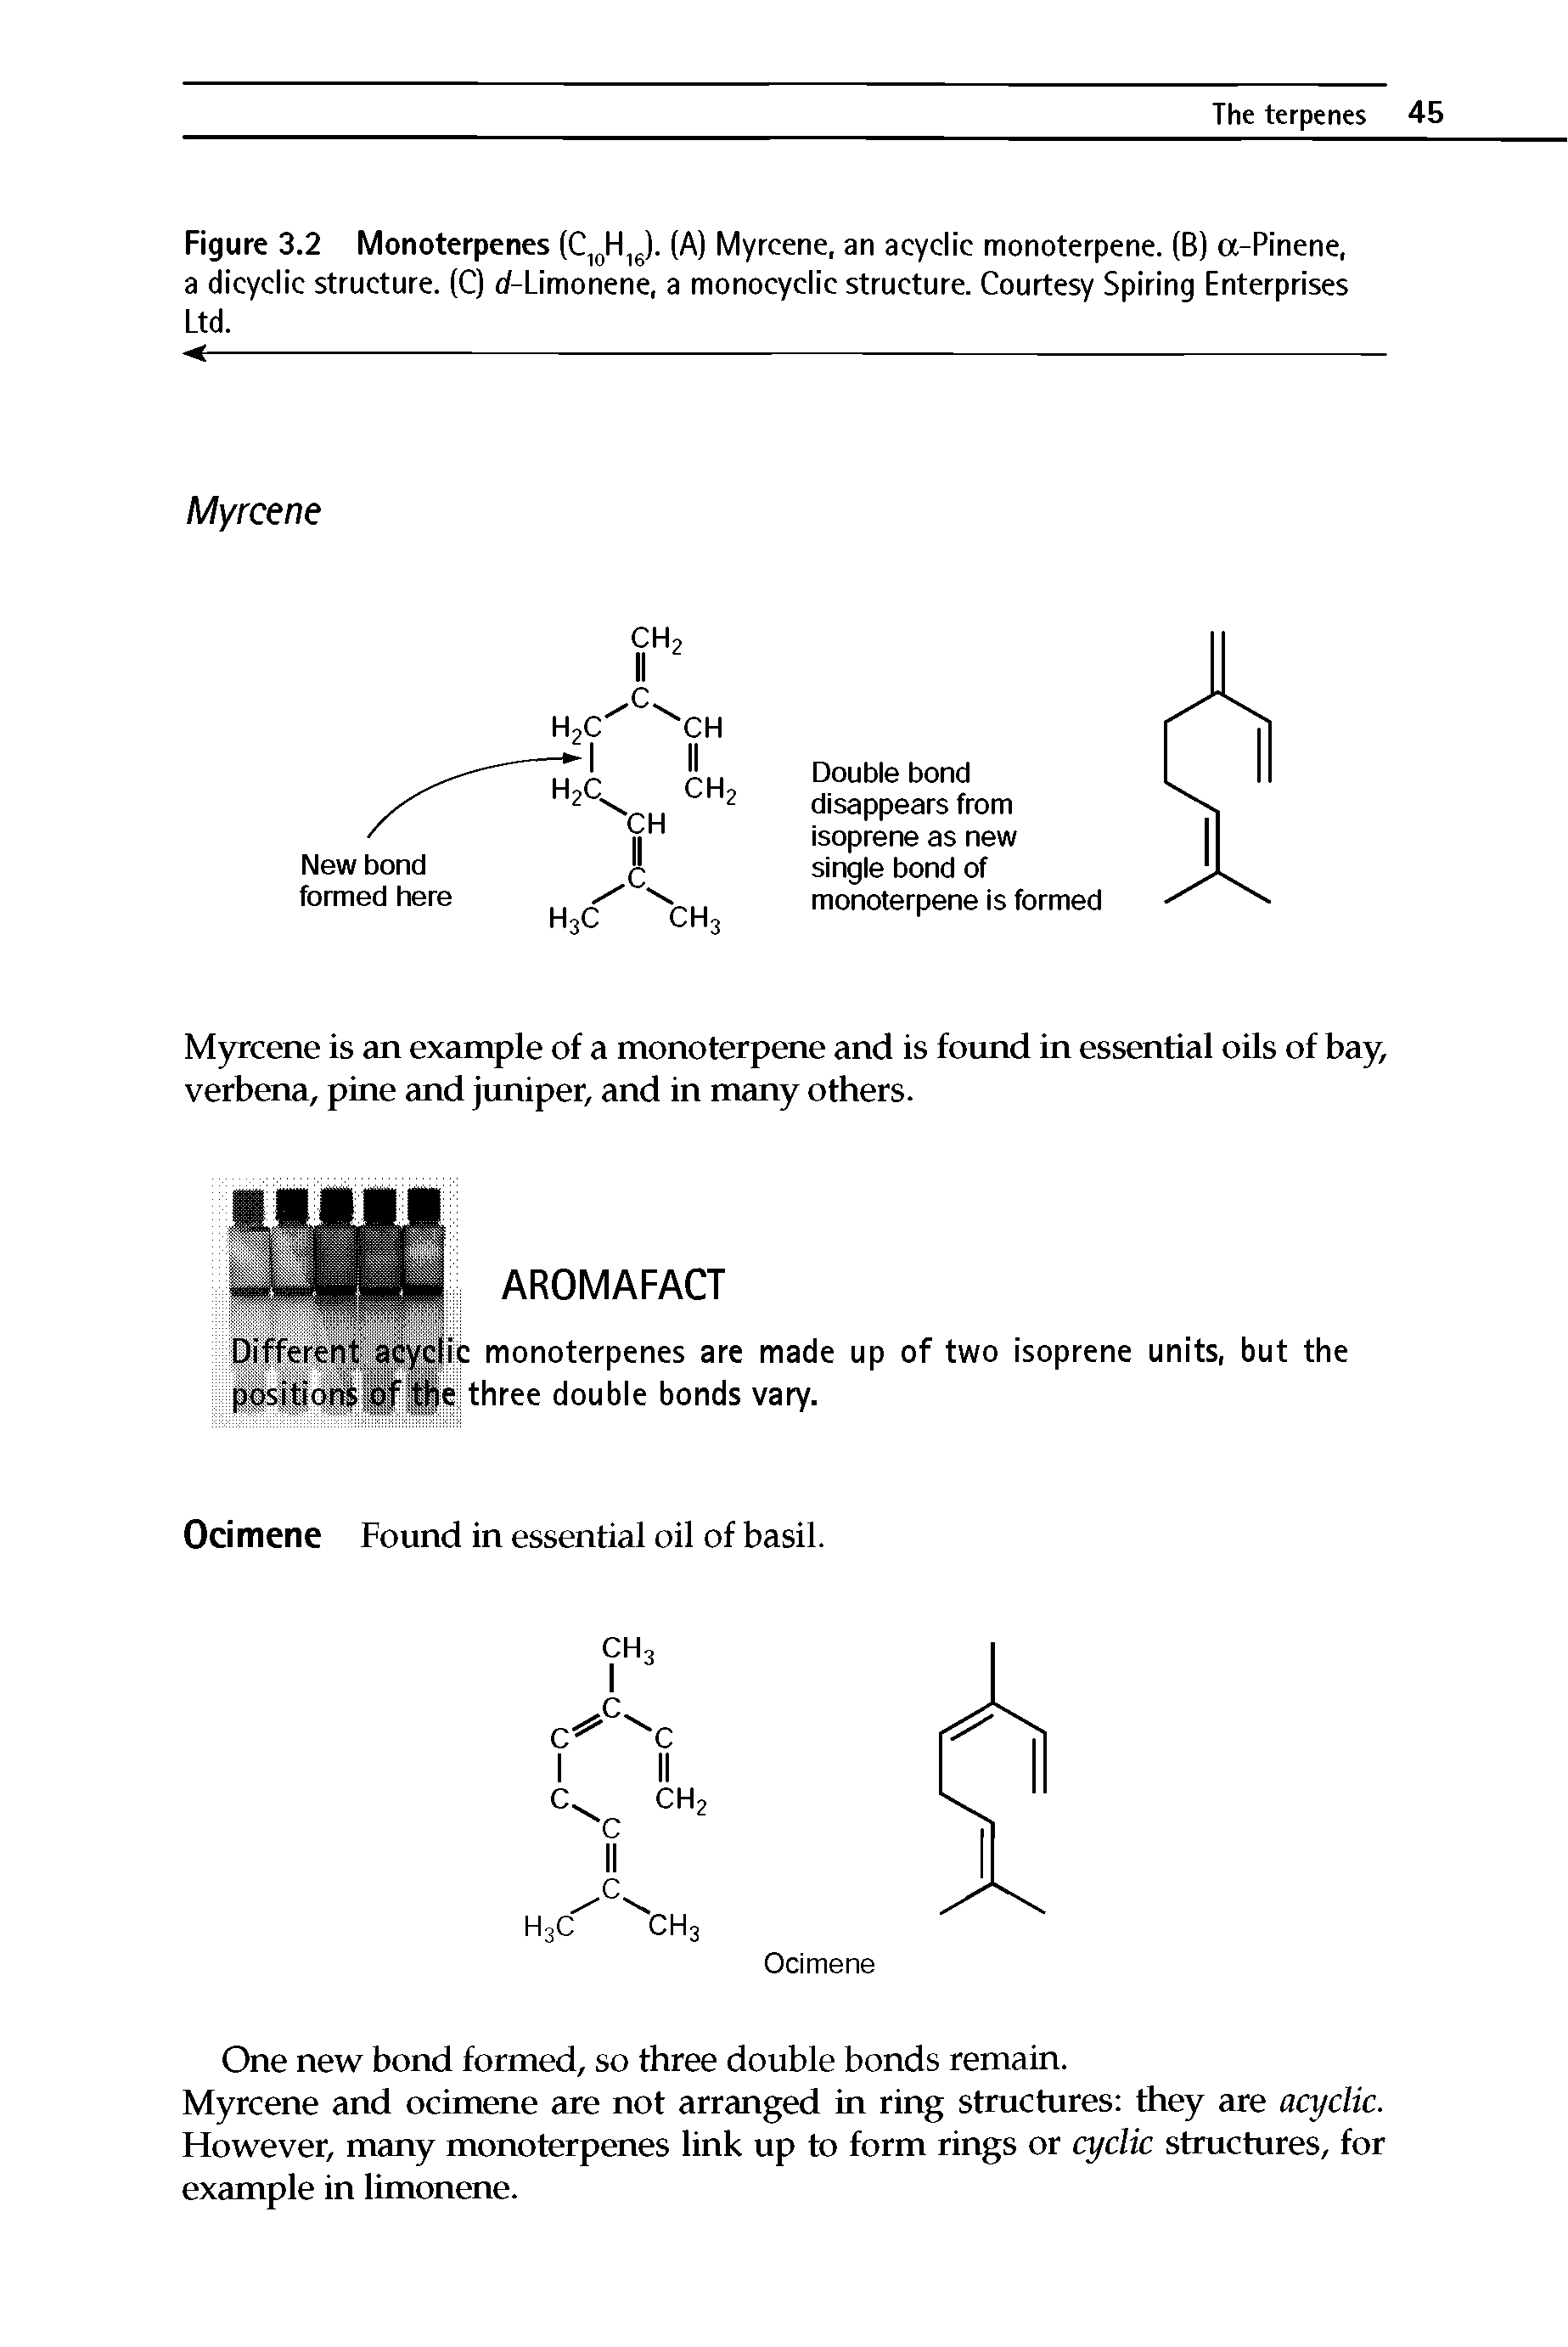 Figure 3.2 Monoterpenes (C10H16). (A) Myreene, an acyclic monoterpene. (B) a-Pinene, a dicyclic structure. (C) d-Limonene, a monocyclic structure. Courtesy Spiring Enterprises Ltd.